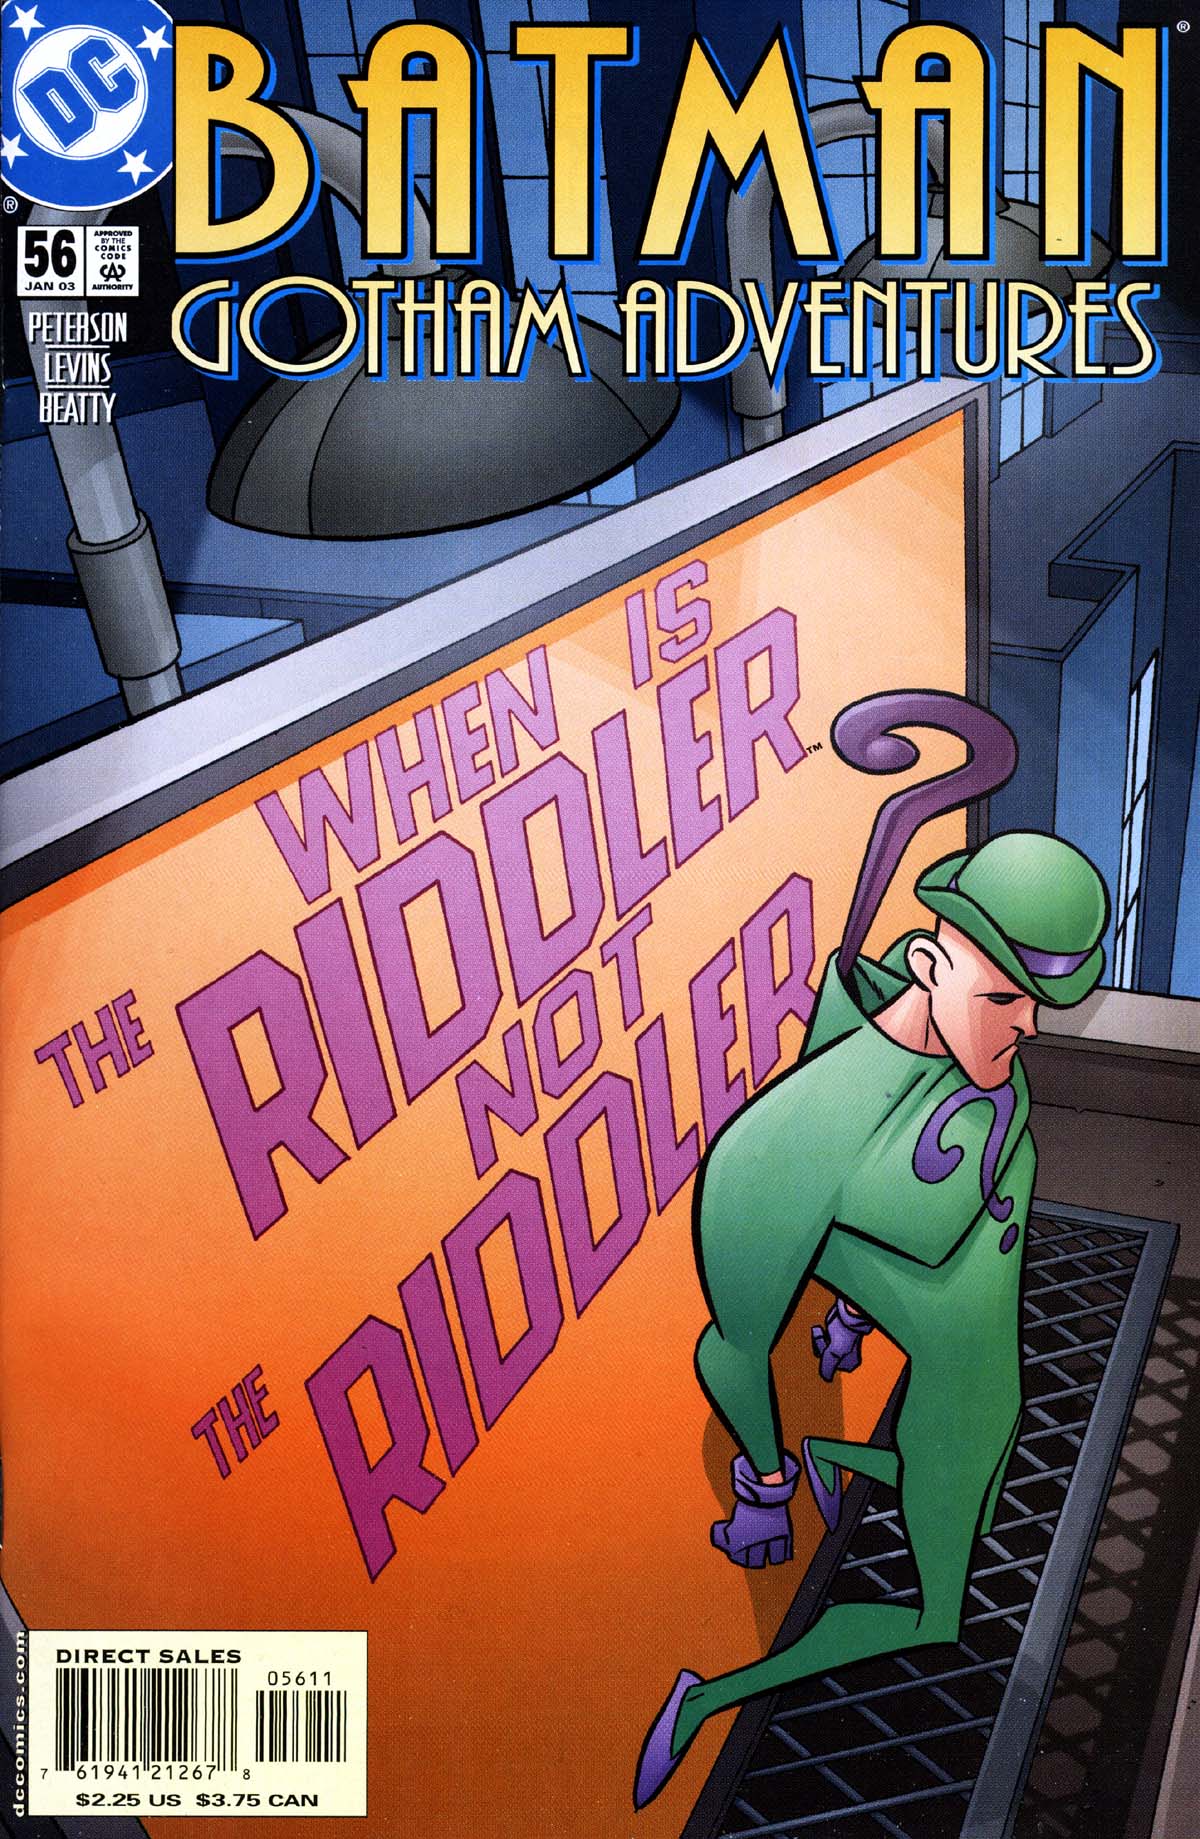 Read online Batman: Gotham Adventures comic -  Issue #56 - 1